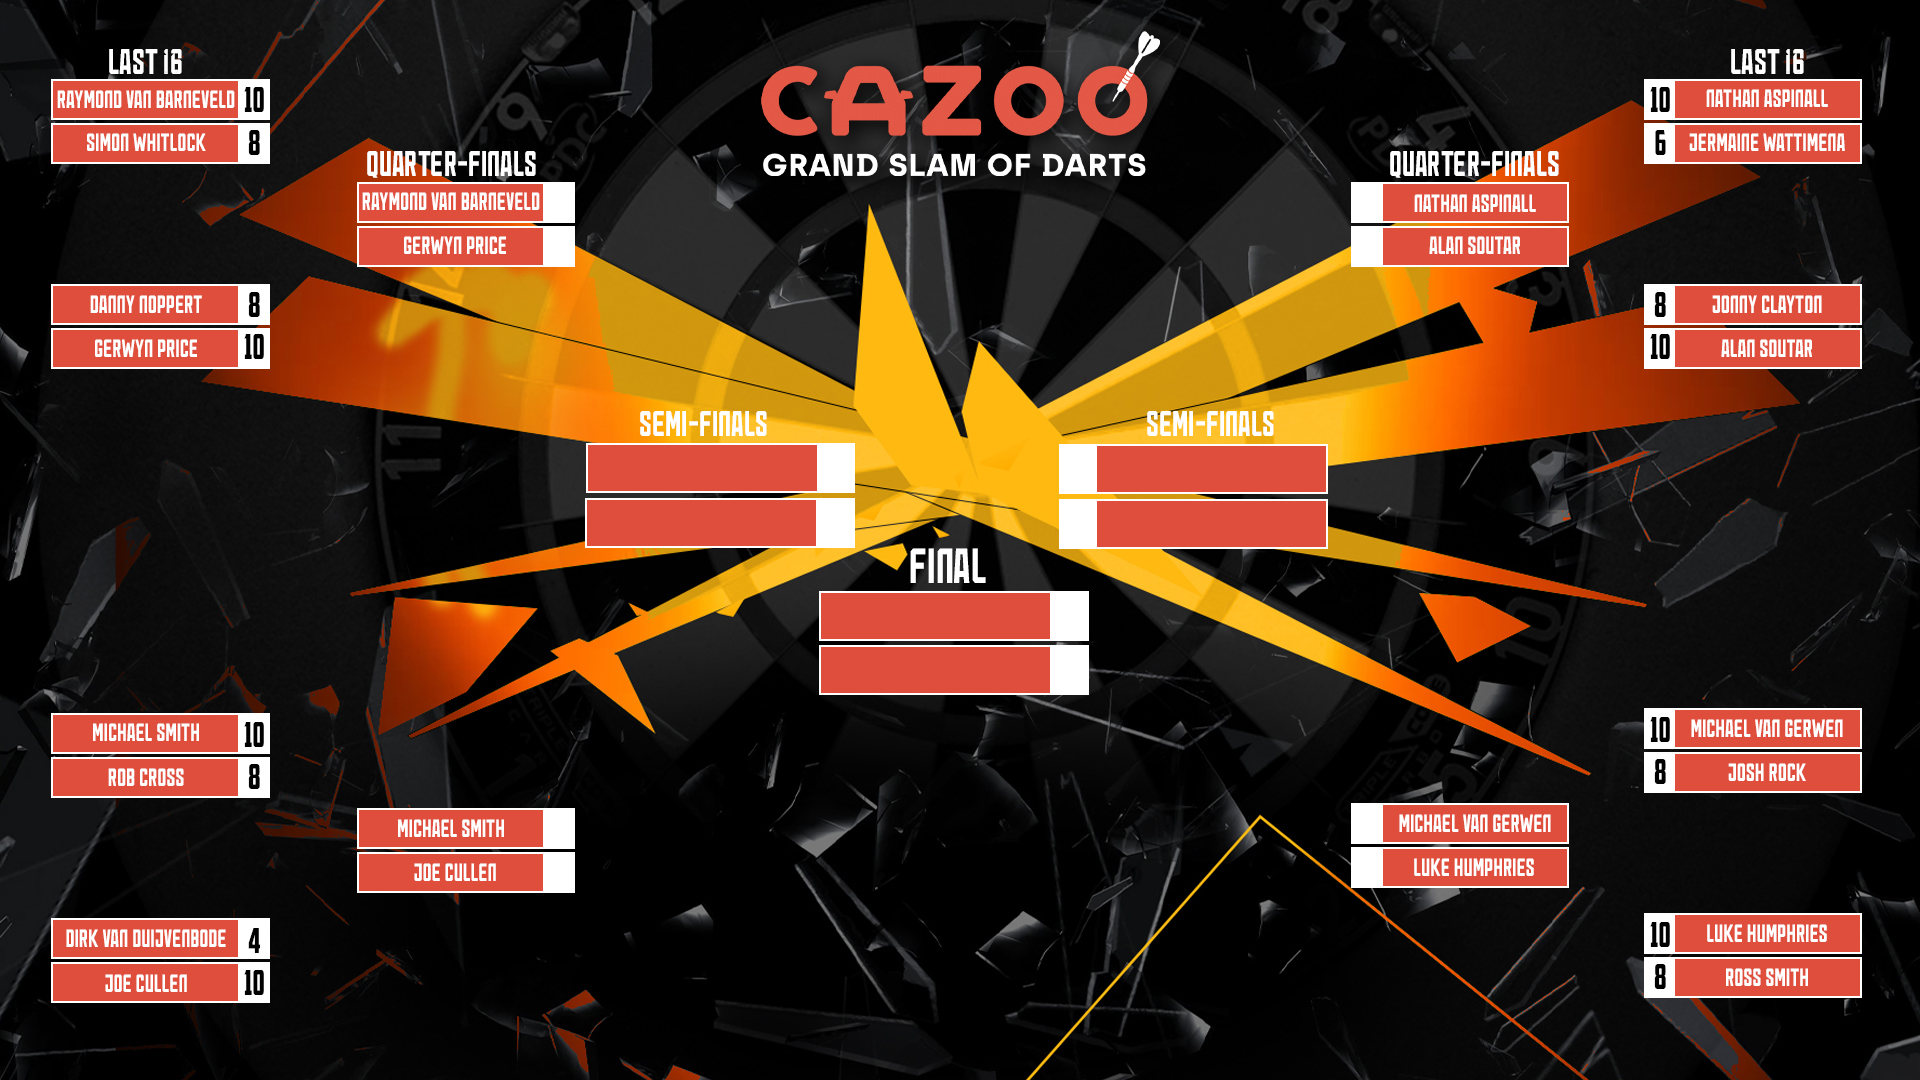 2022 Cazoo Grand Slam of Darts - Draw Bracket